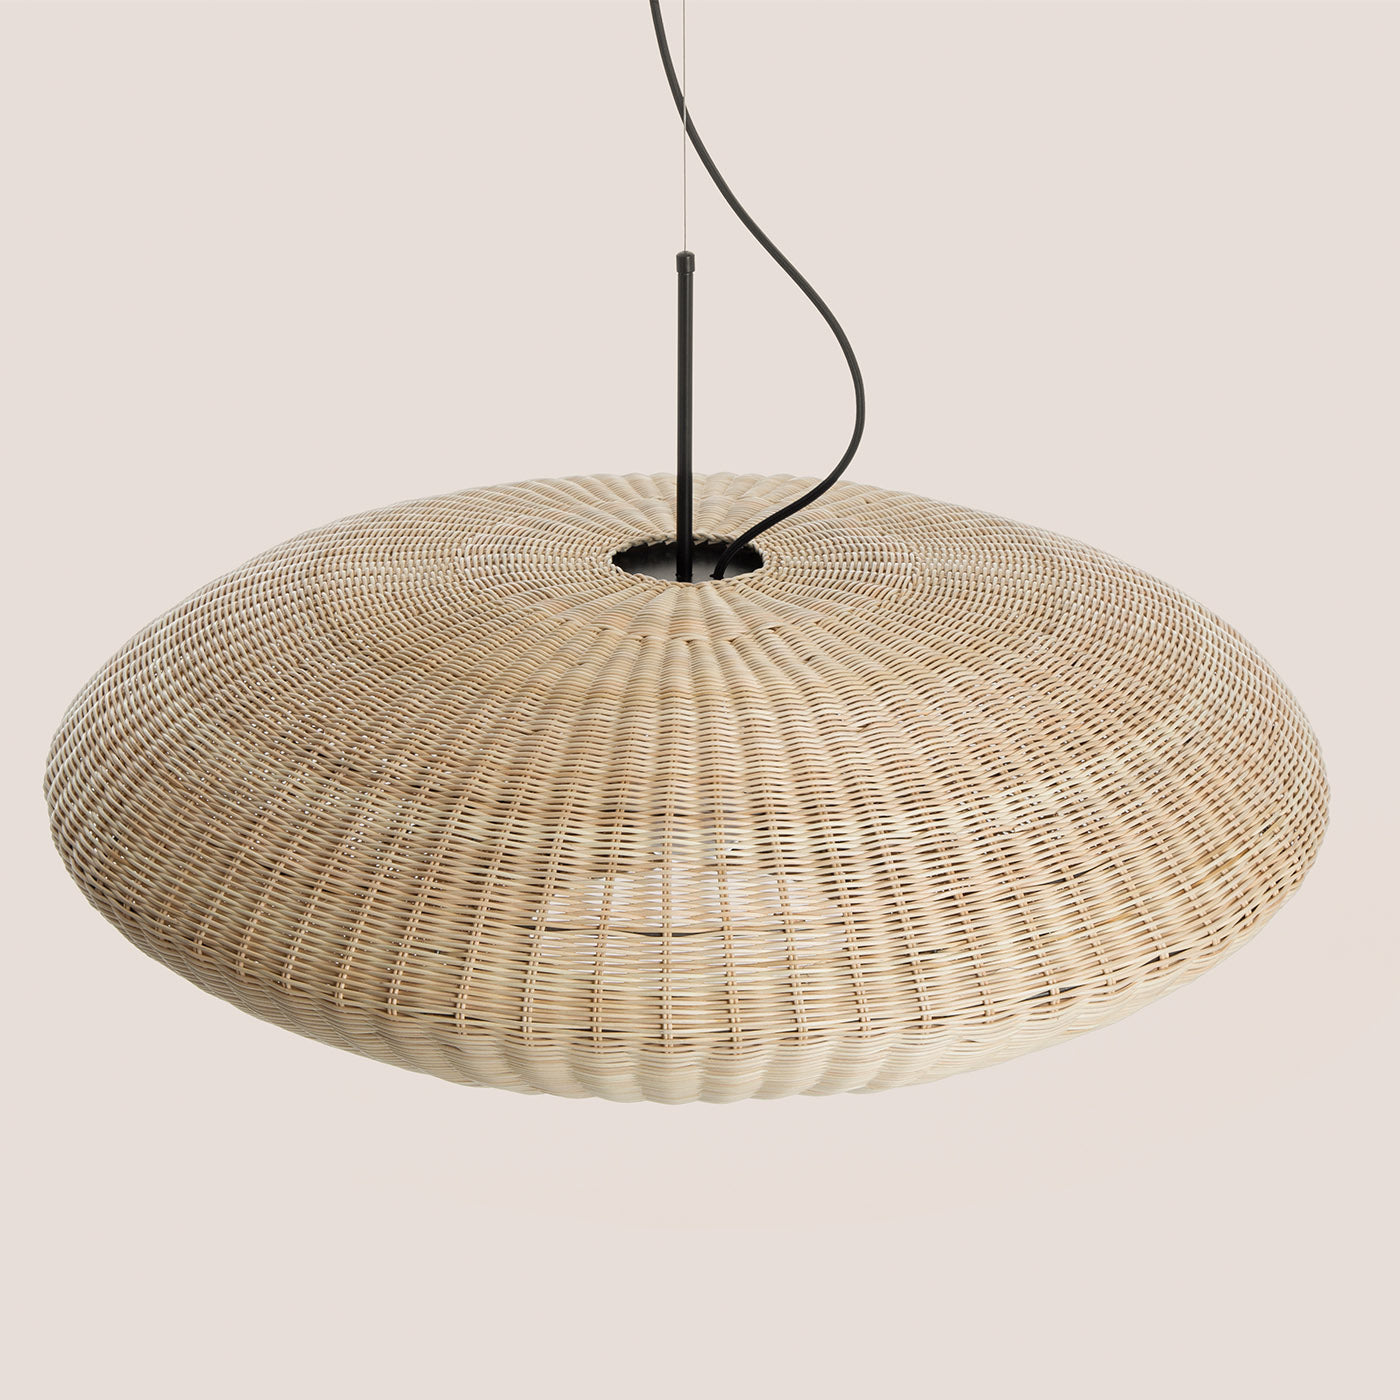 Antonym Pendant Lamp by Silvia Stella Osella #1 - Alternative view 1